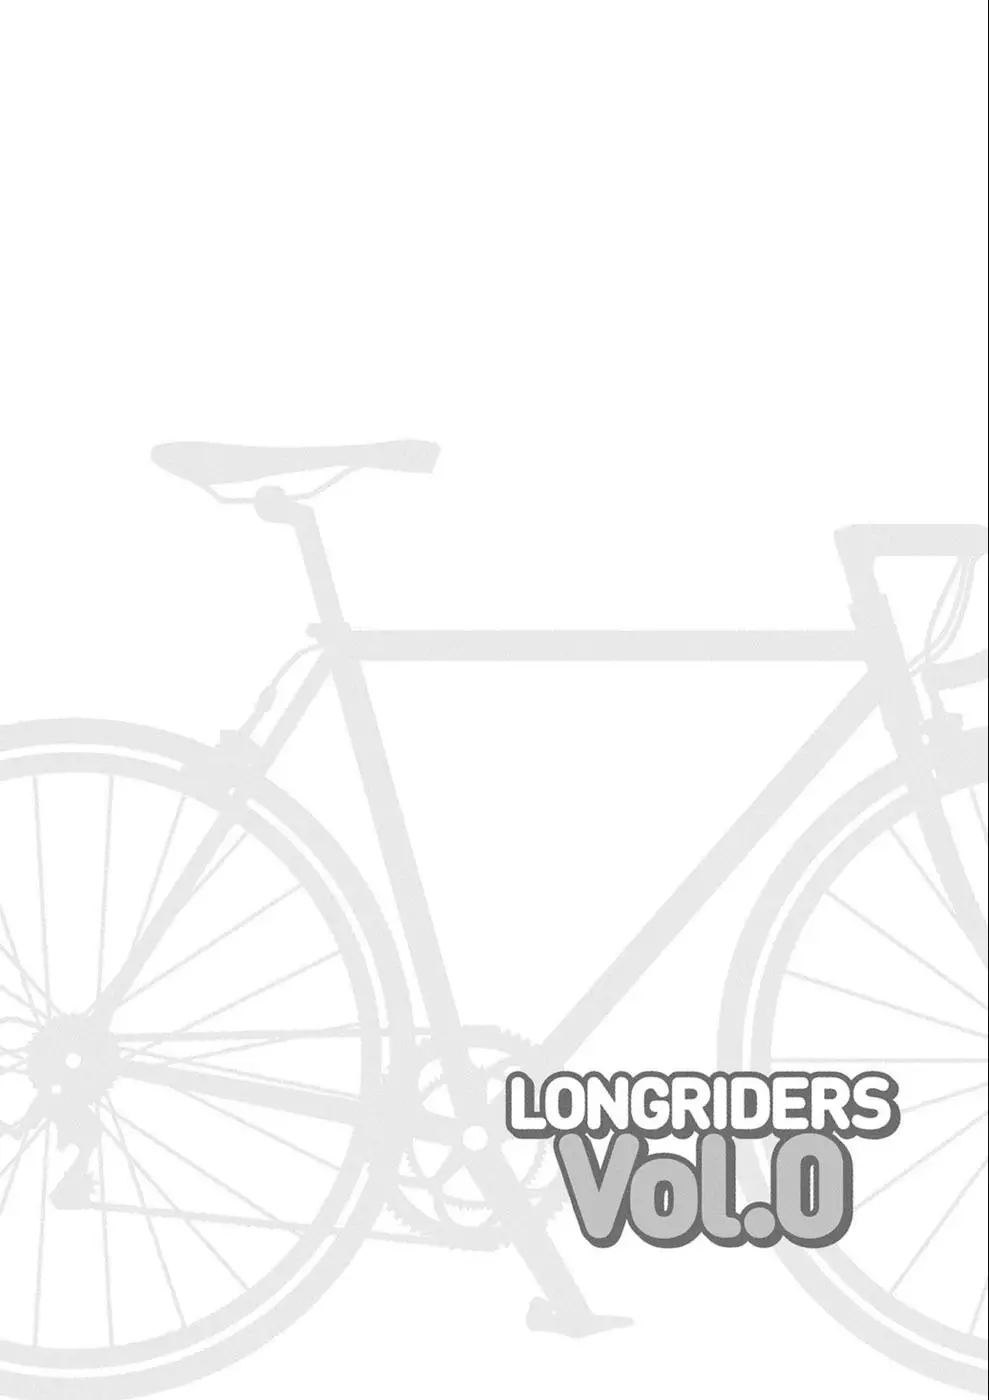 Long Riders! - 22.3 page 1-af5abdaa